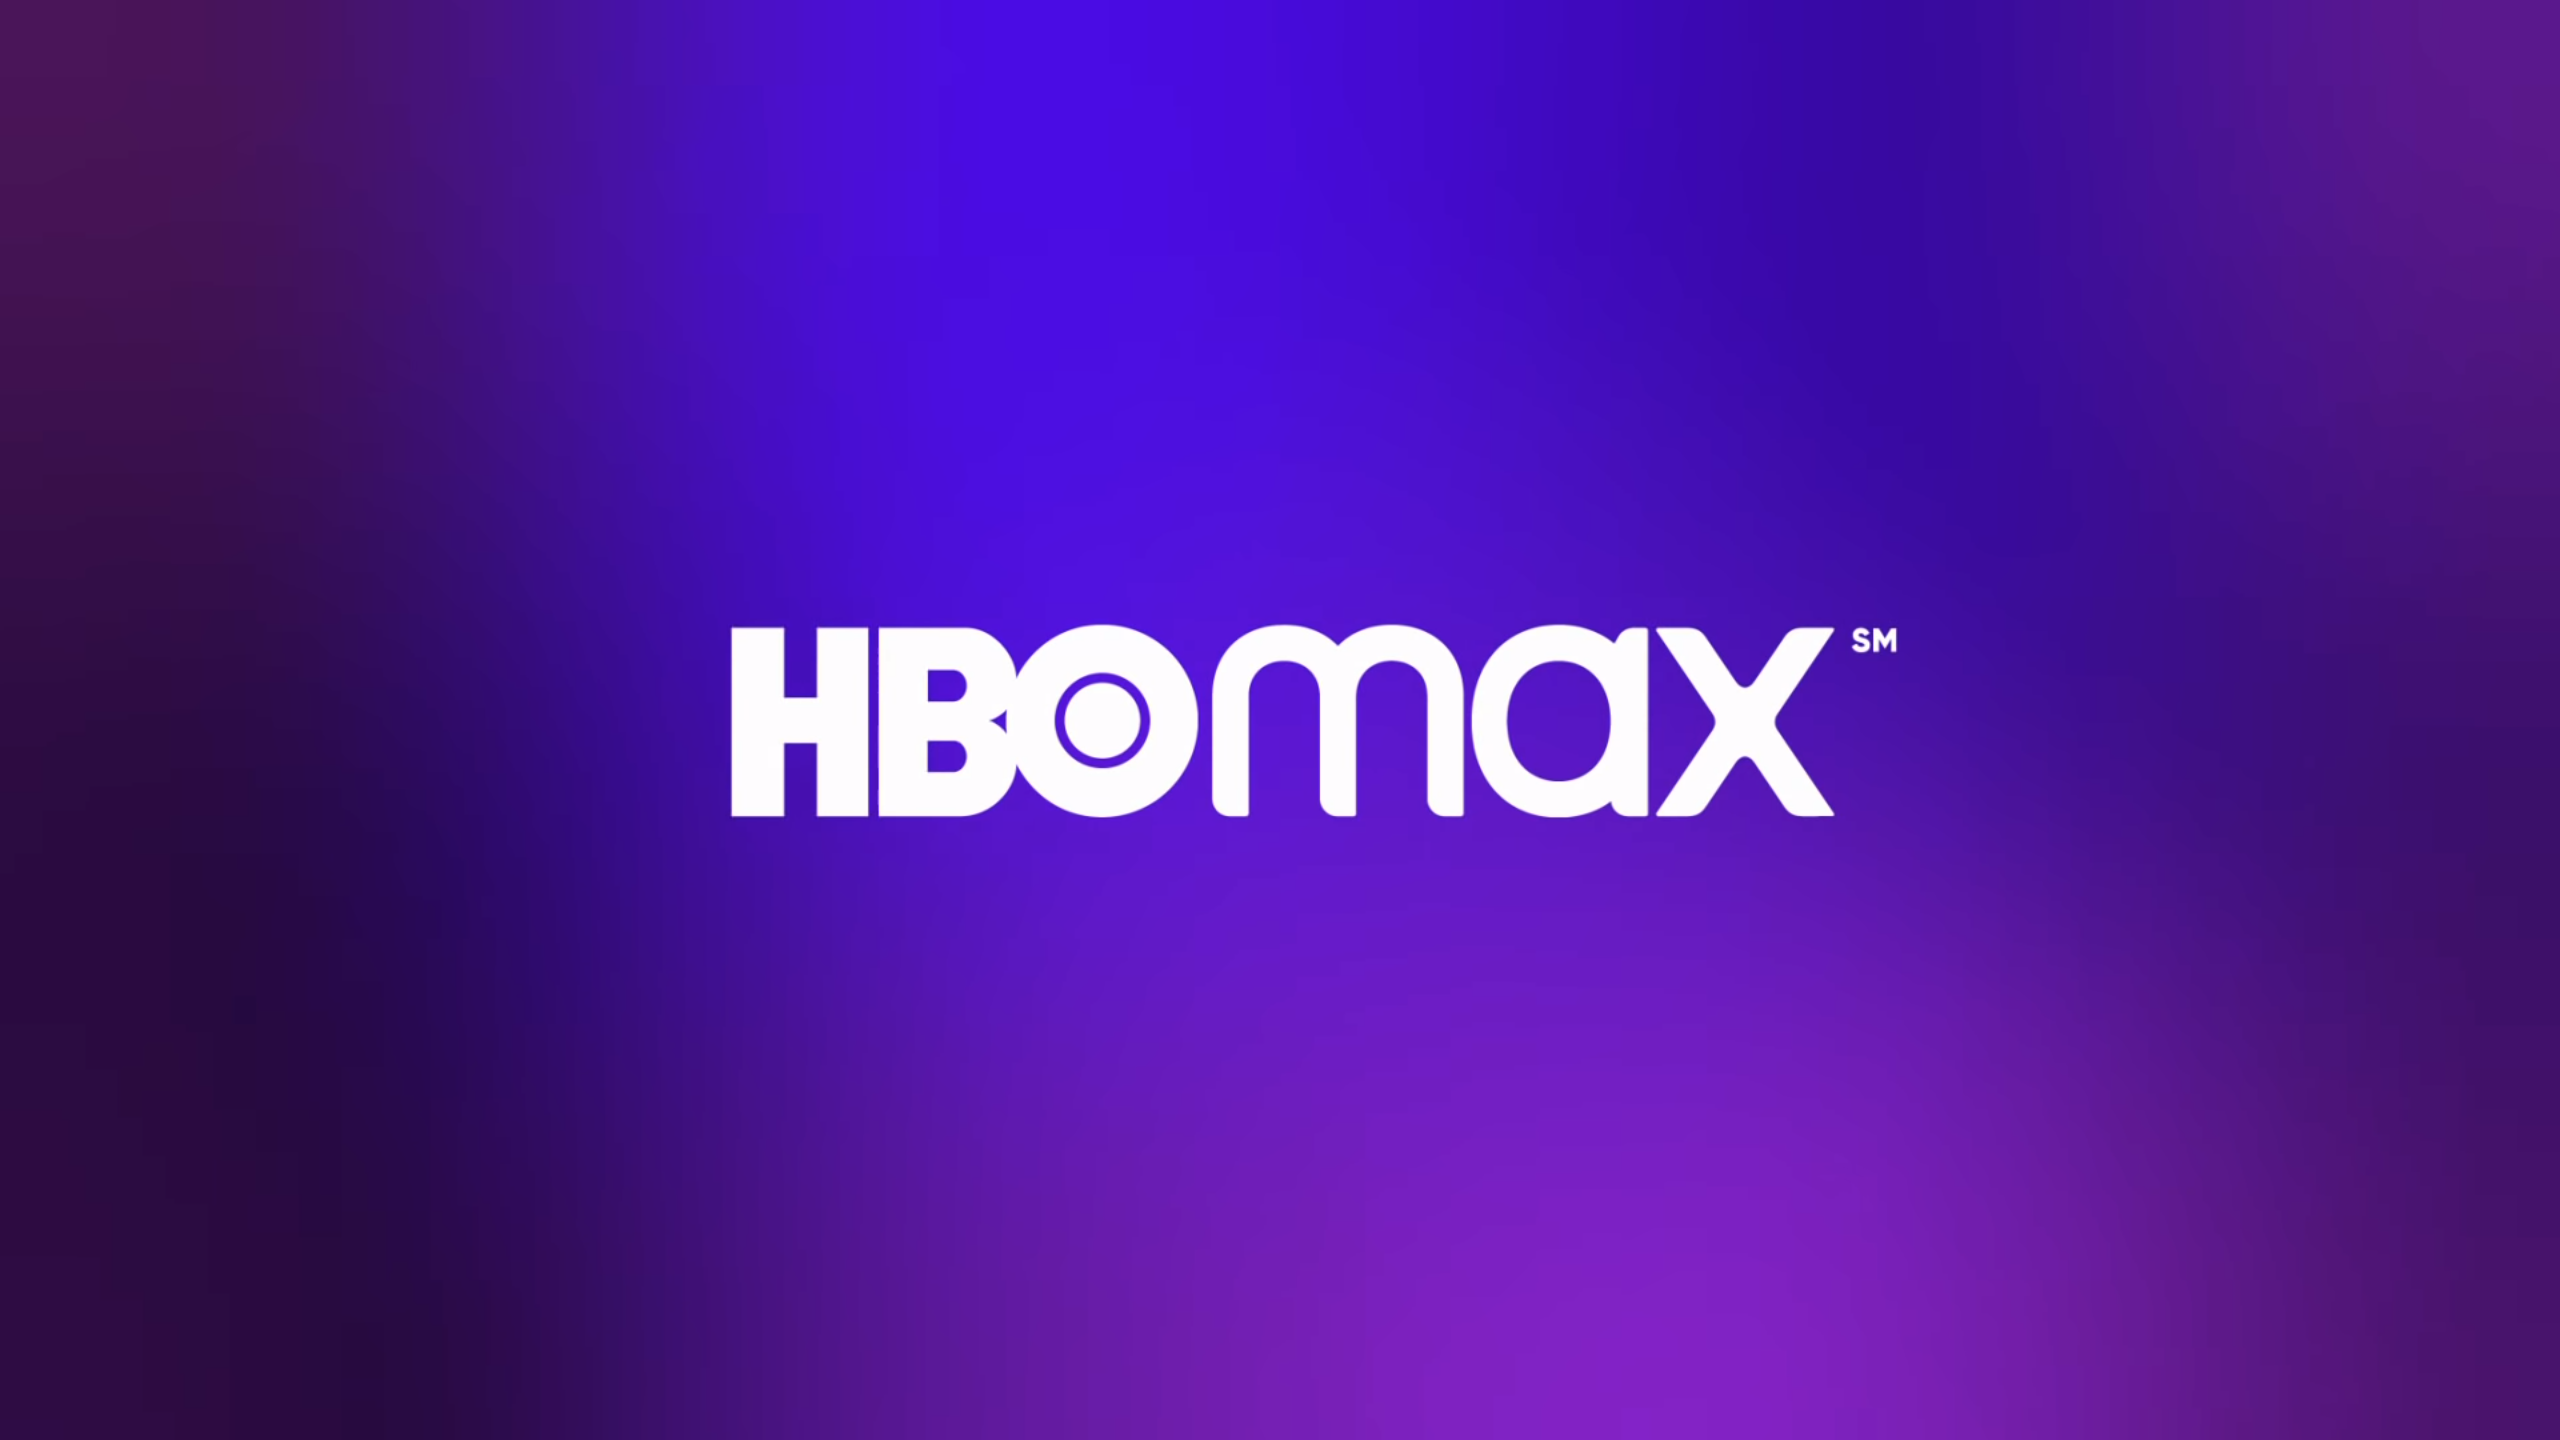 HBO Max, encore un nouveau service de streaming (en 2020)